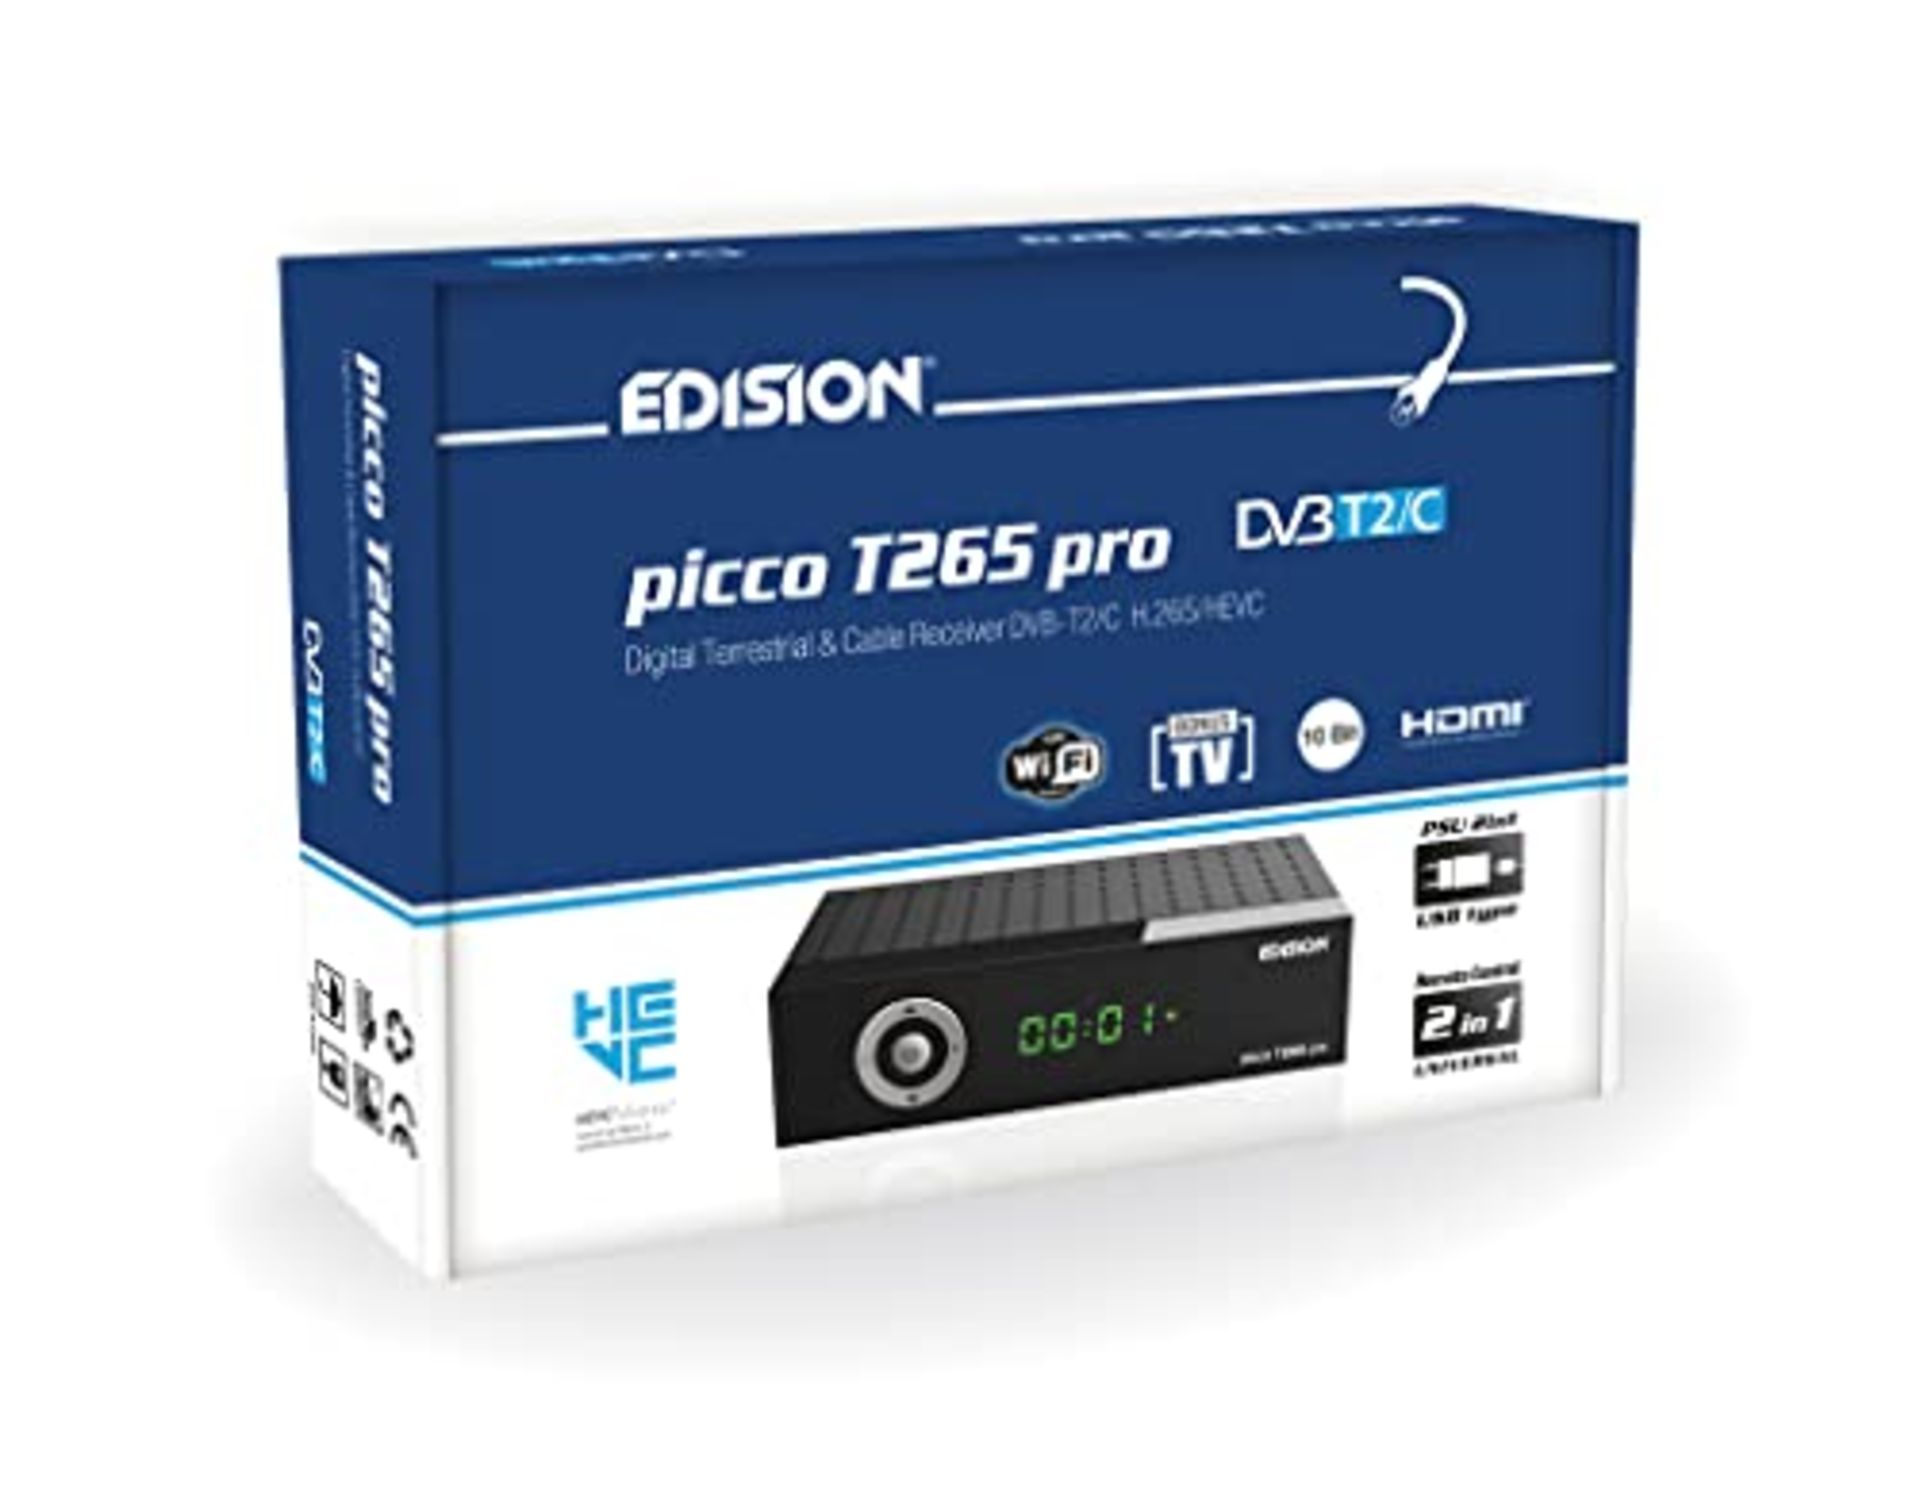 EDISION PICCO T265 pro Terrestrial & Cable Receiver DVB-T2/C H265 HEVC FTA Full HD, PV